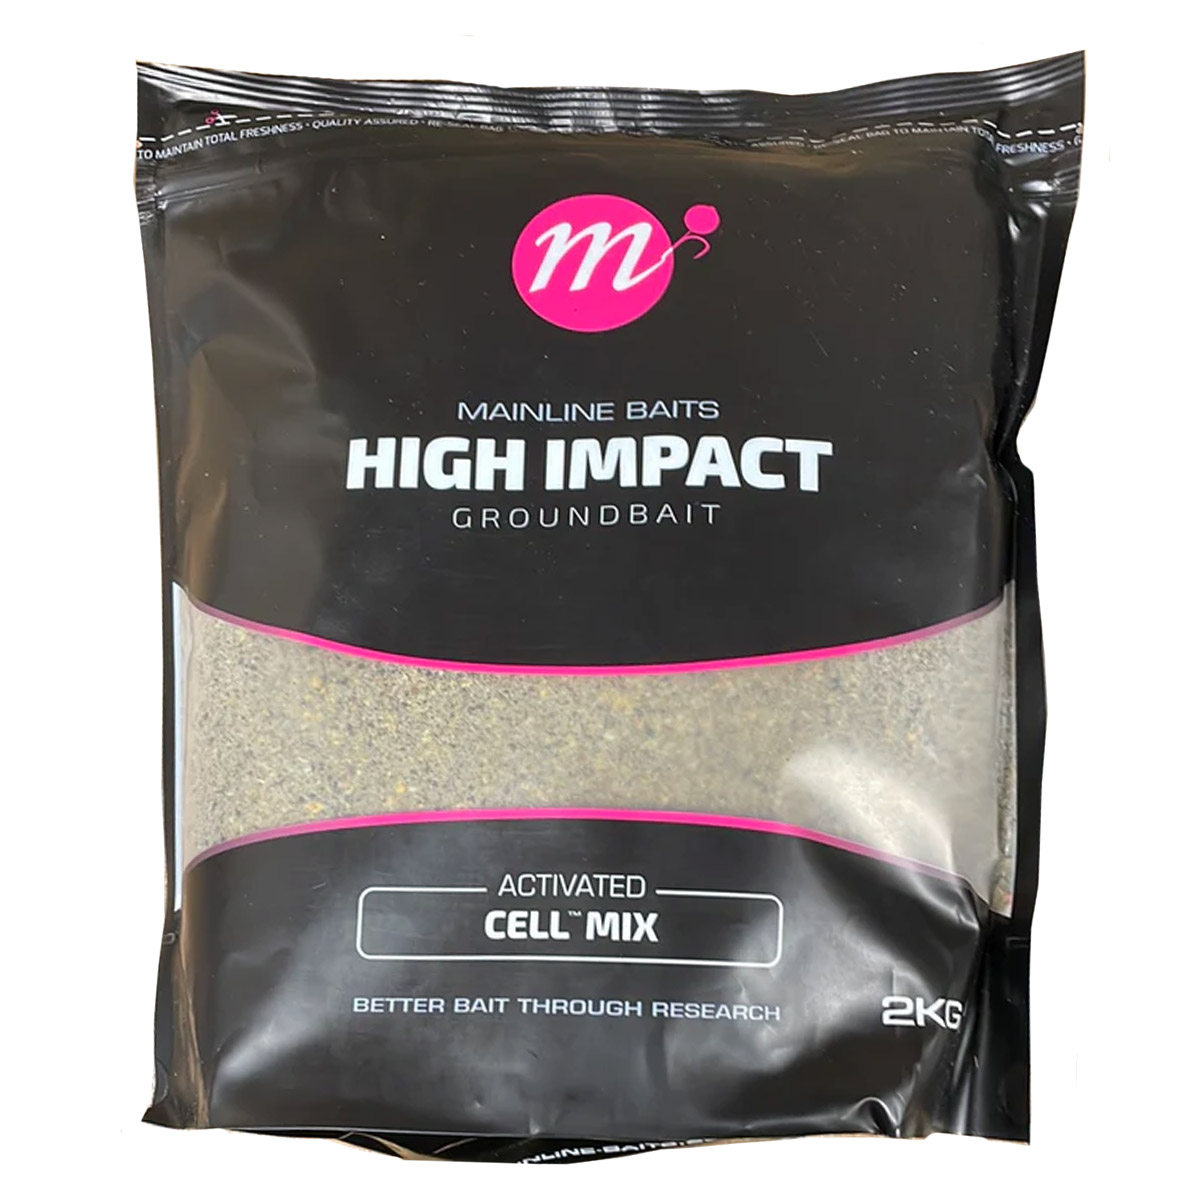 Mainline High Impact Groundbait-Cell